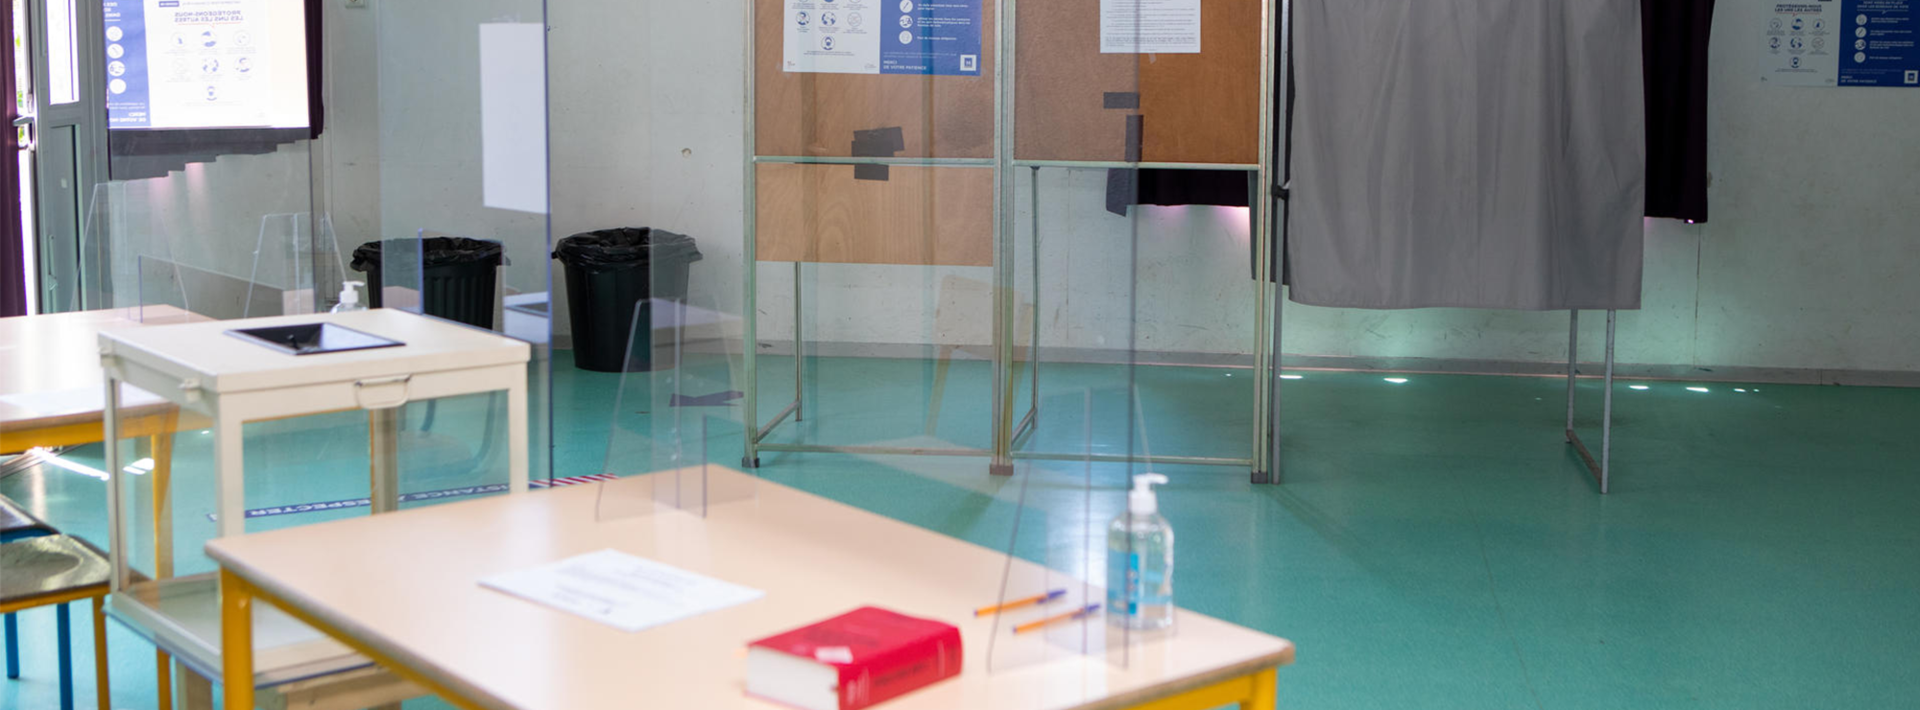 knal Gemoedsrust Pijlpunt Bureaux de vote - Ville de Montpellier